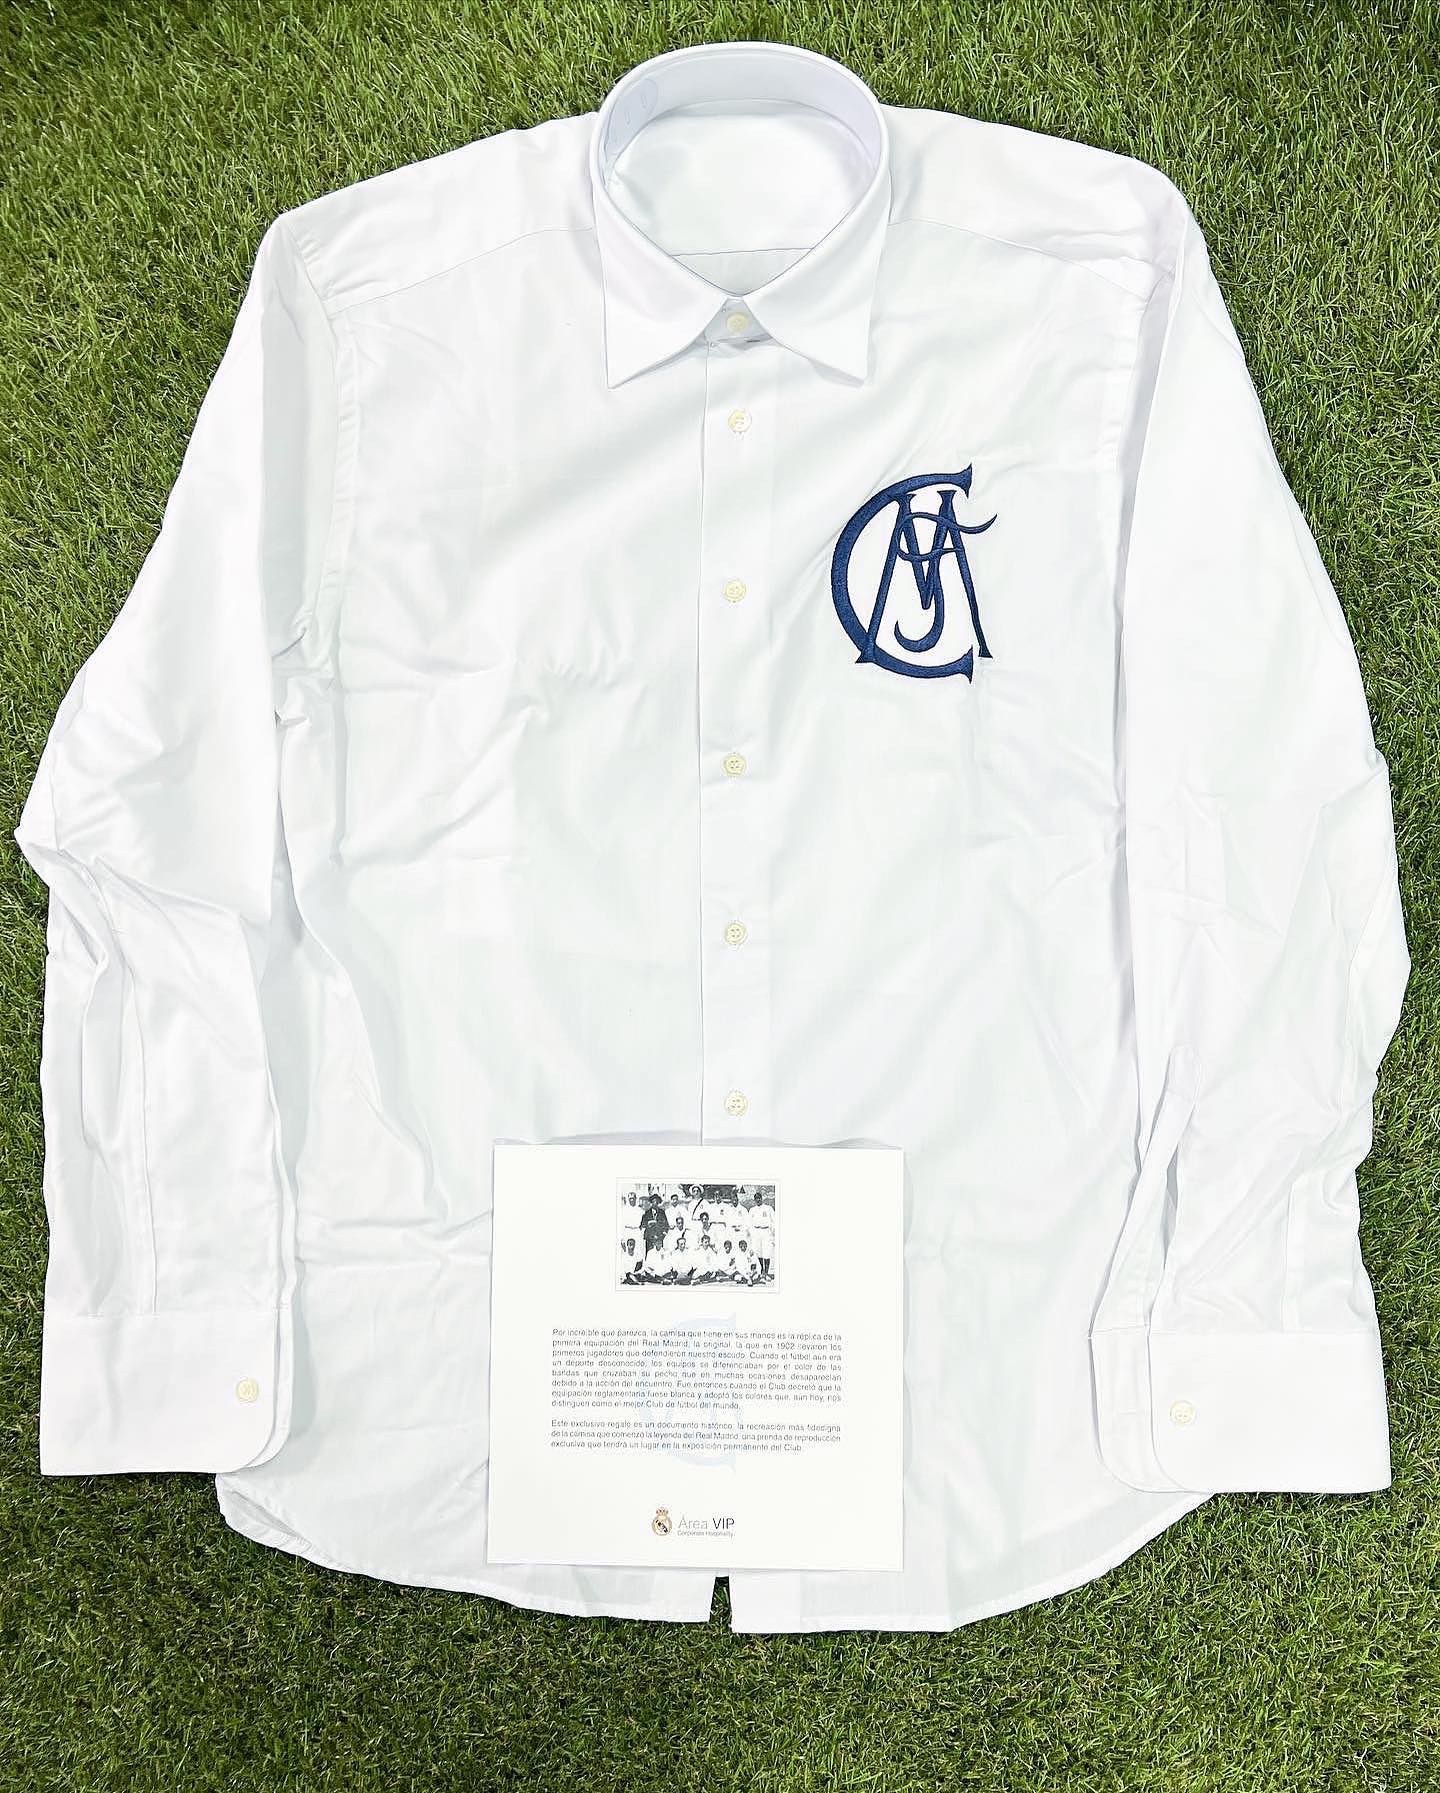 Camisa Reedicion 1902 Real Madrid, Regalo Area VIP